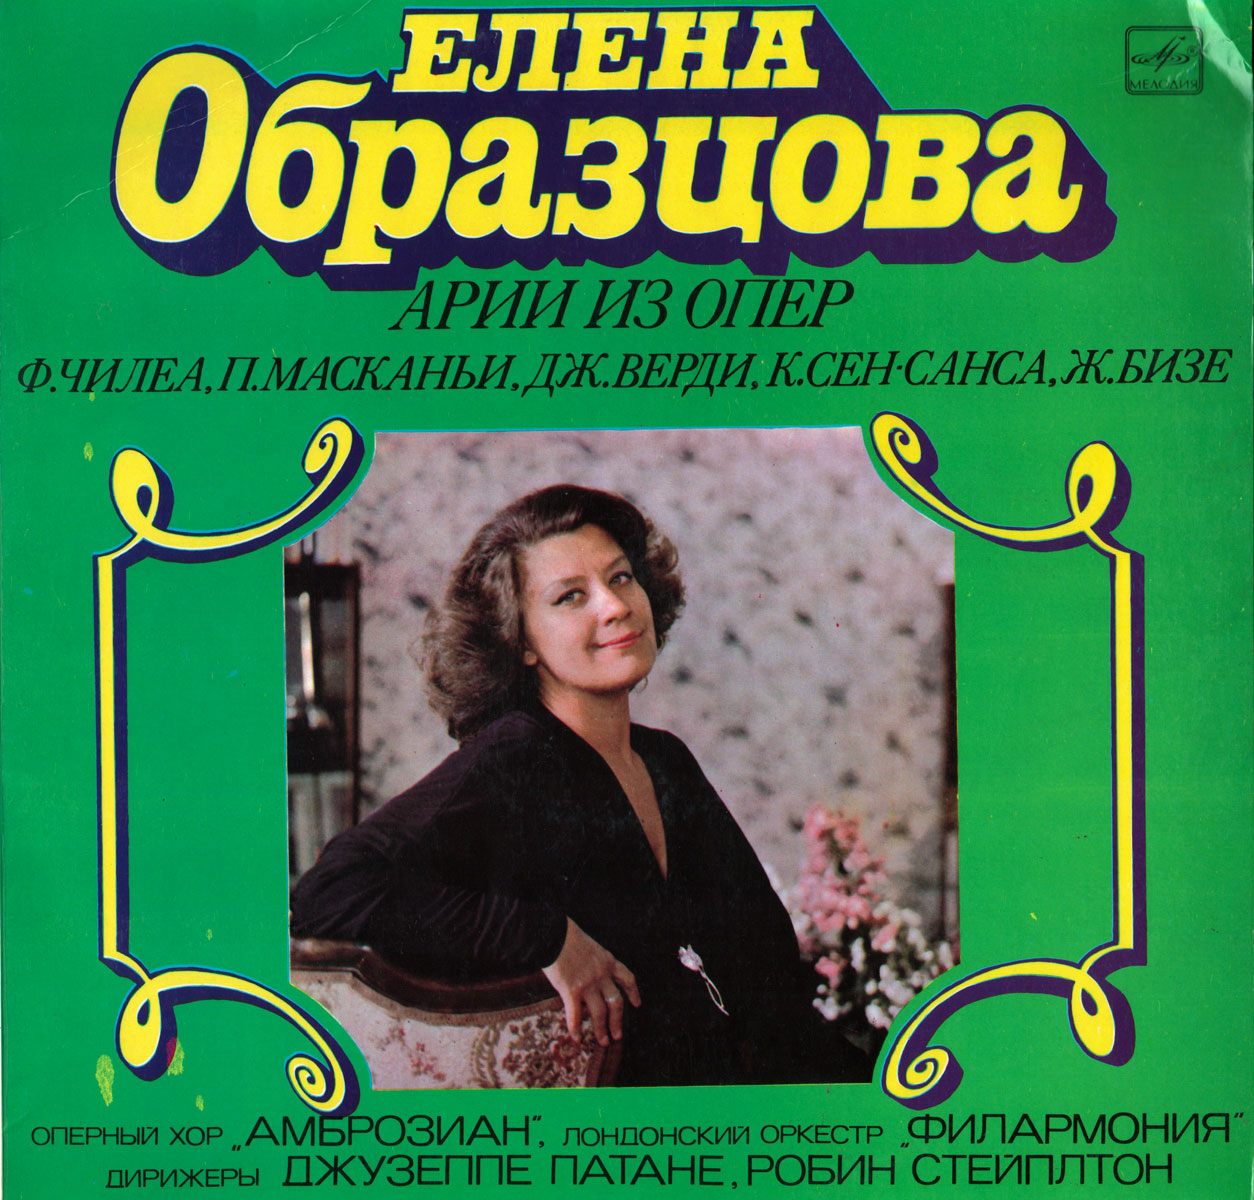 Елена Образцова (меццо-сопрано). Арии из опер